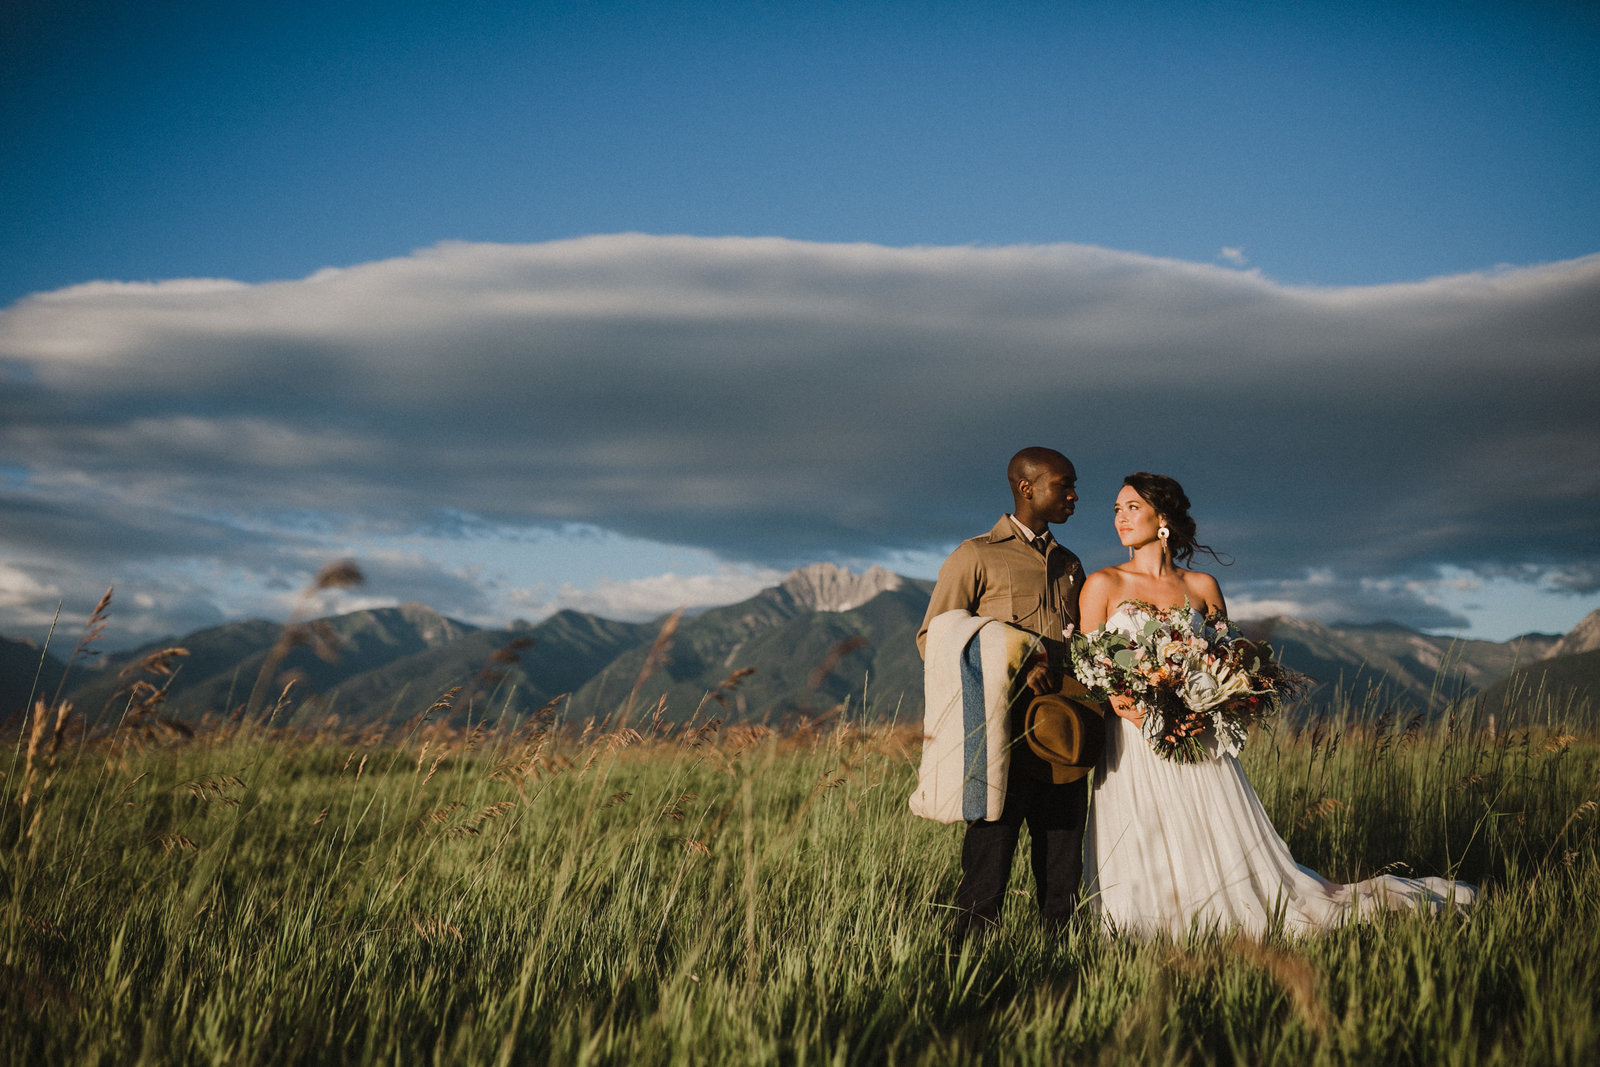 Styled adventure wedding shoot. photographed in Montana for Velvet Bride.